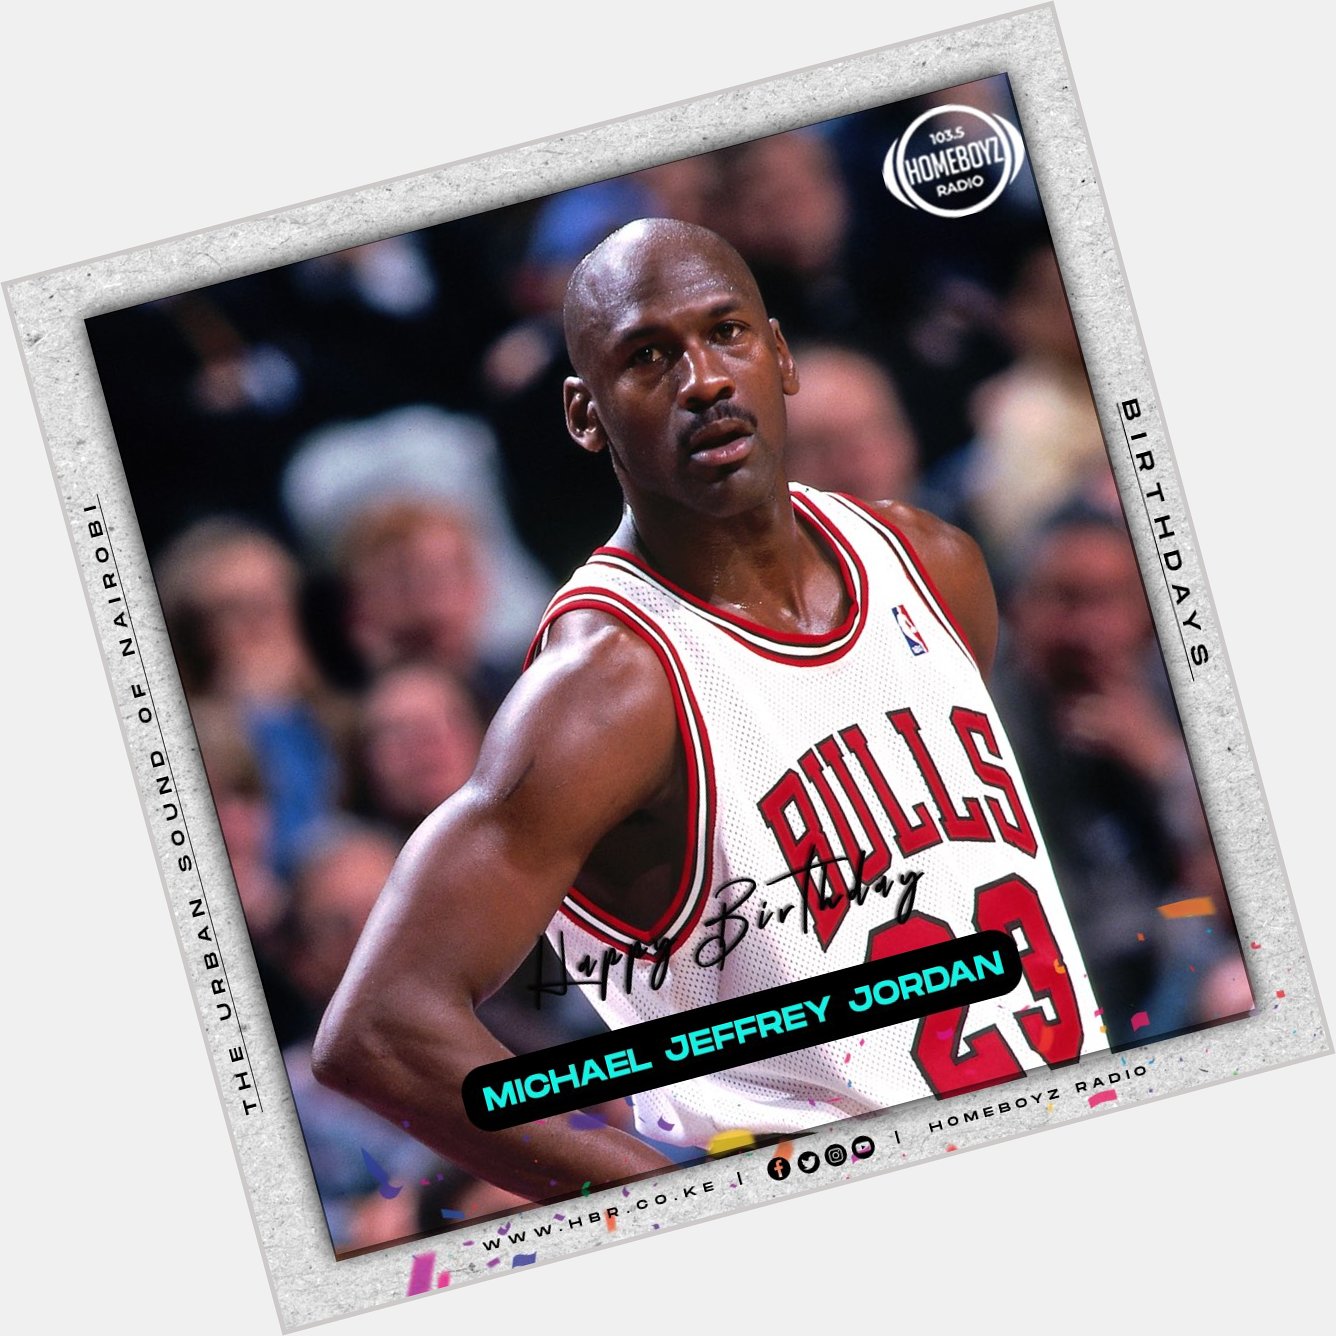 Michael Jordan turns 59 today  Happy Birthday to the basketball legend   